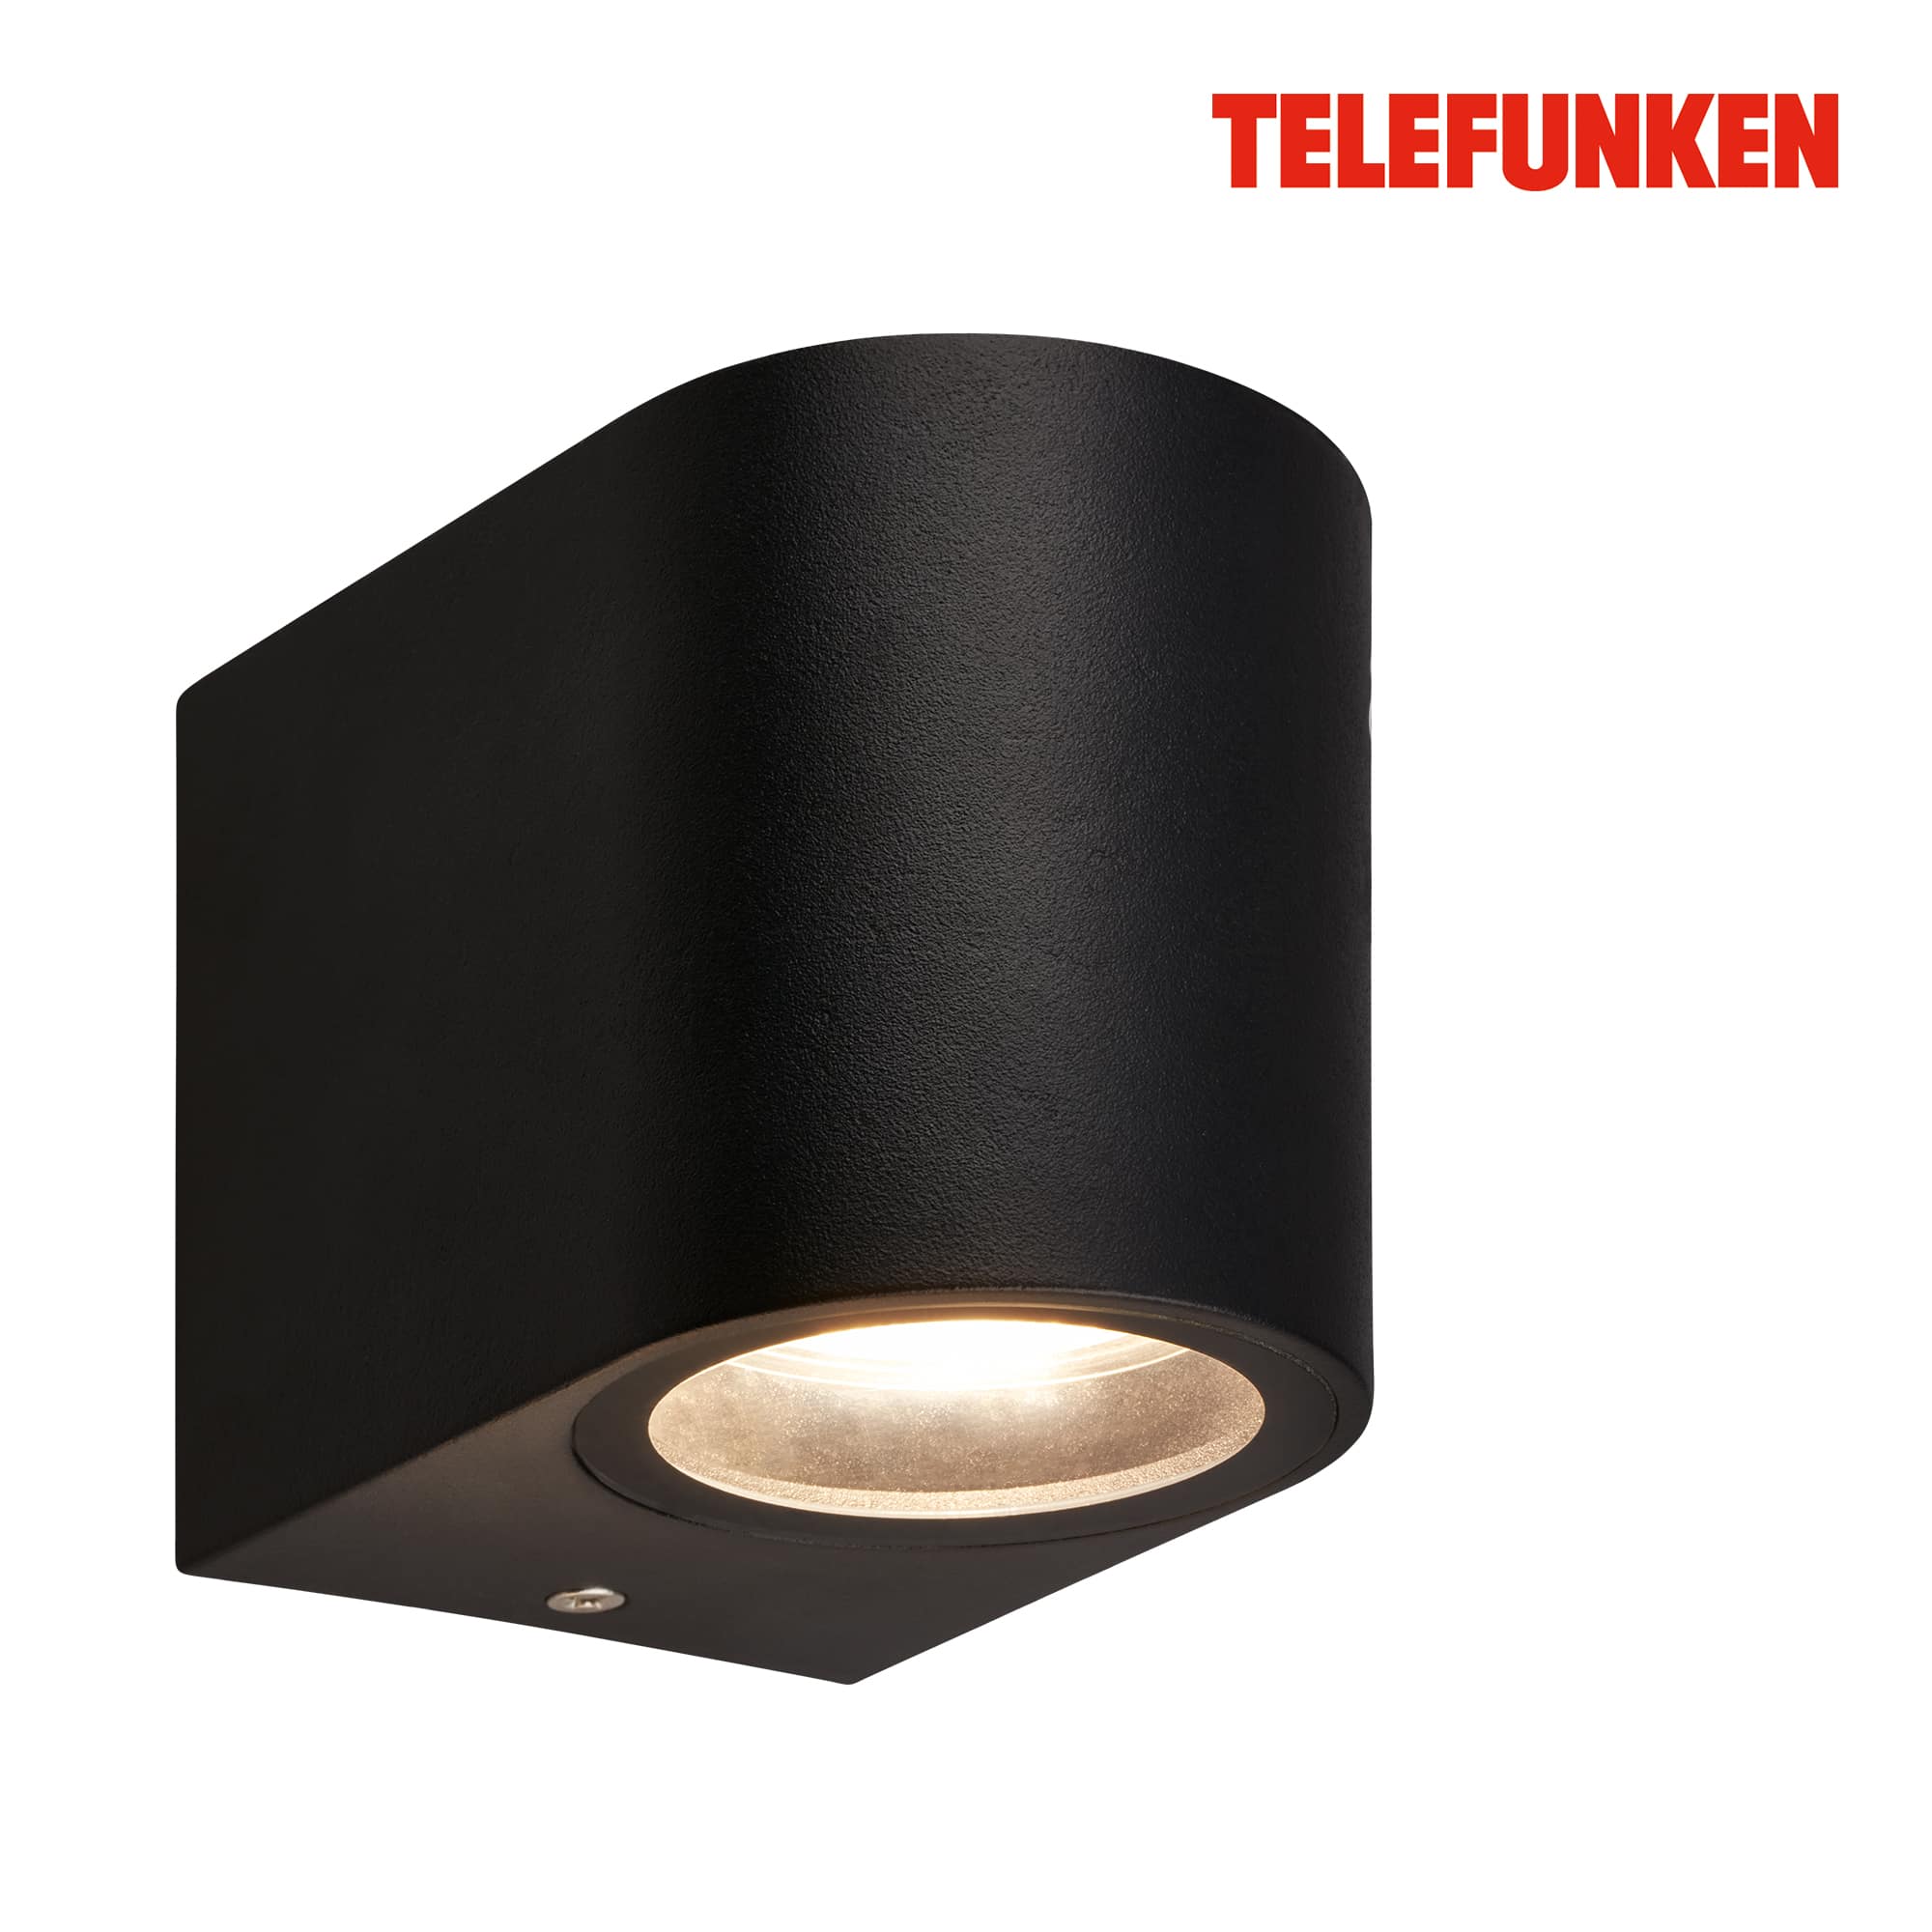 Lampada da parete Telefunken LED, resistente agli spruzzi, accensione/spegnimento tramite interruttore a parete